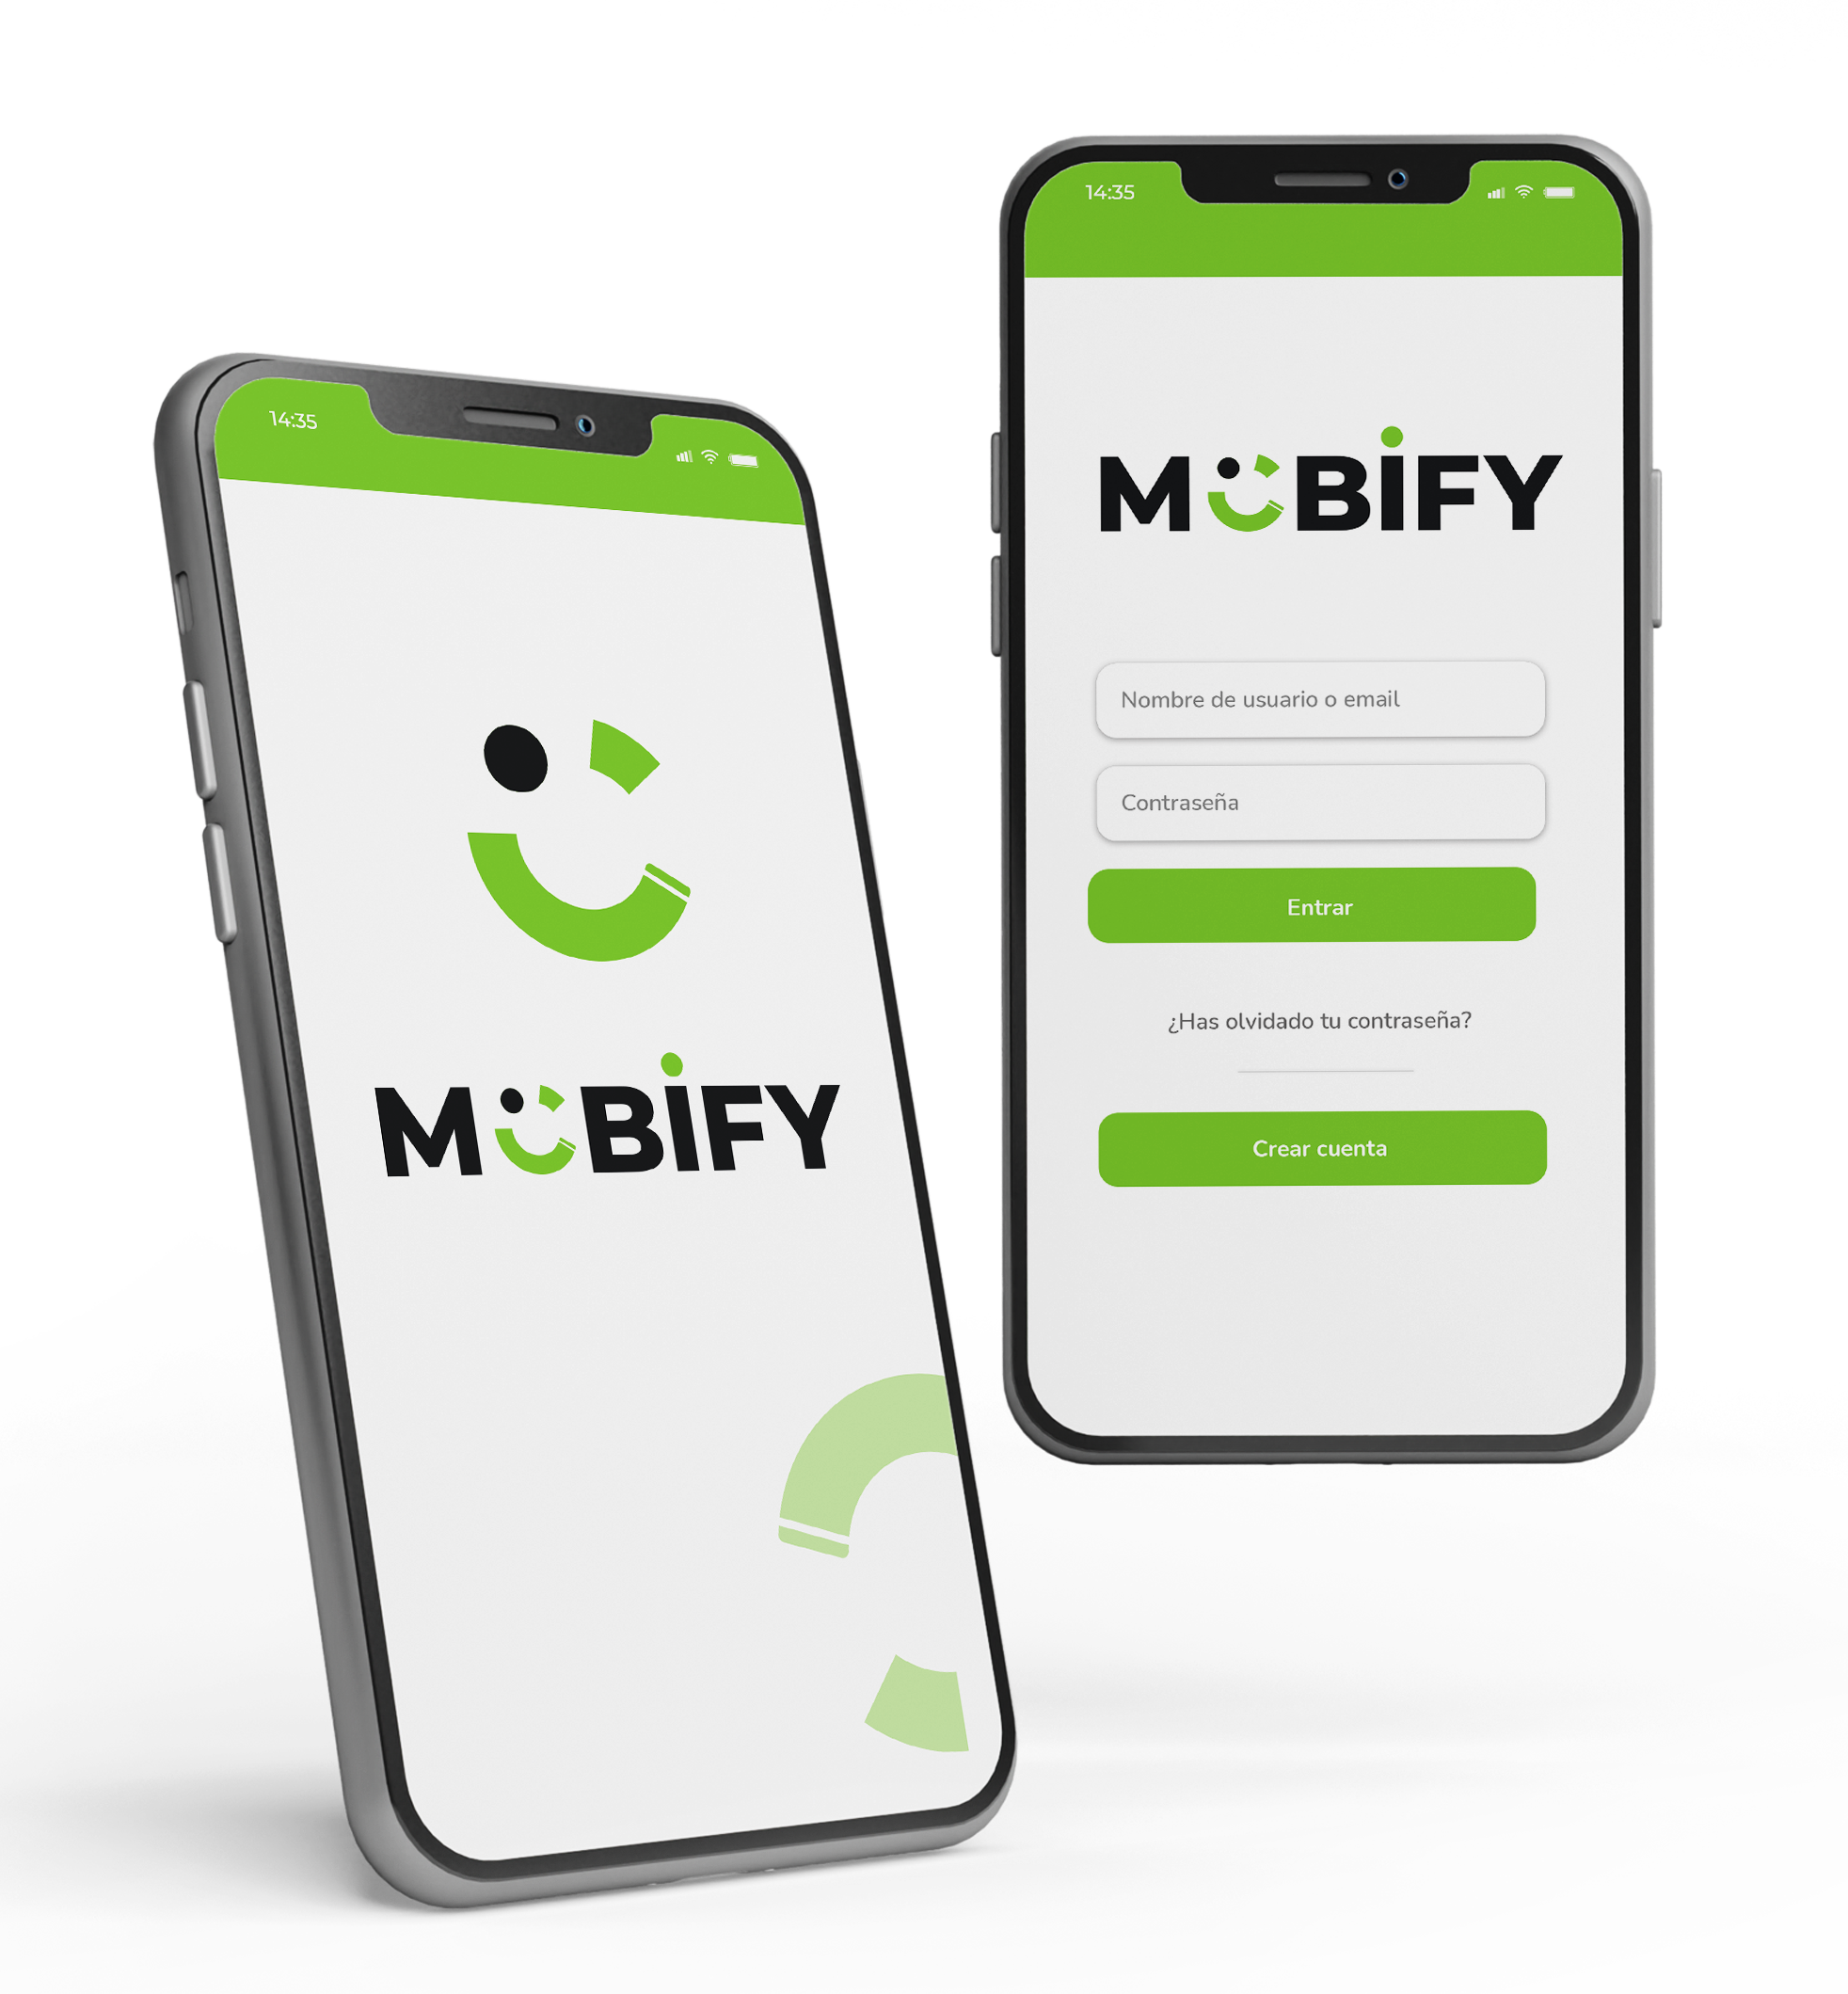 App Mobify sostenibilidad turismo ecologico alquiler coche